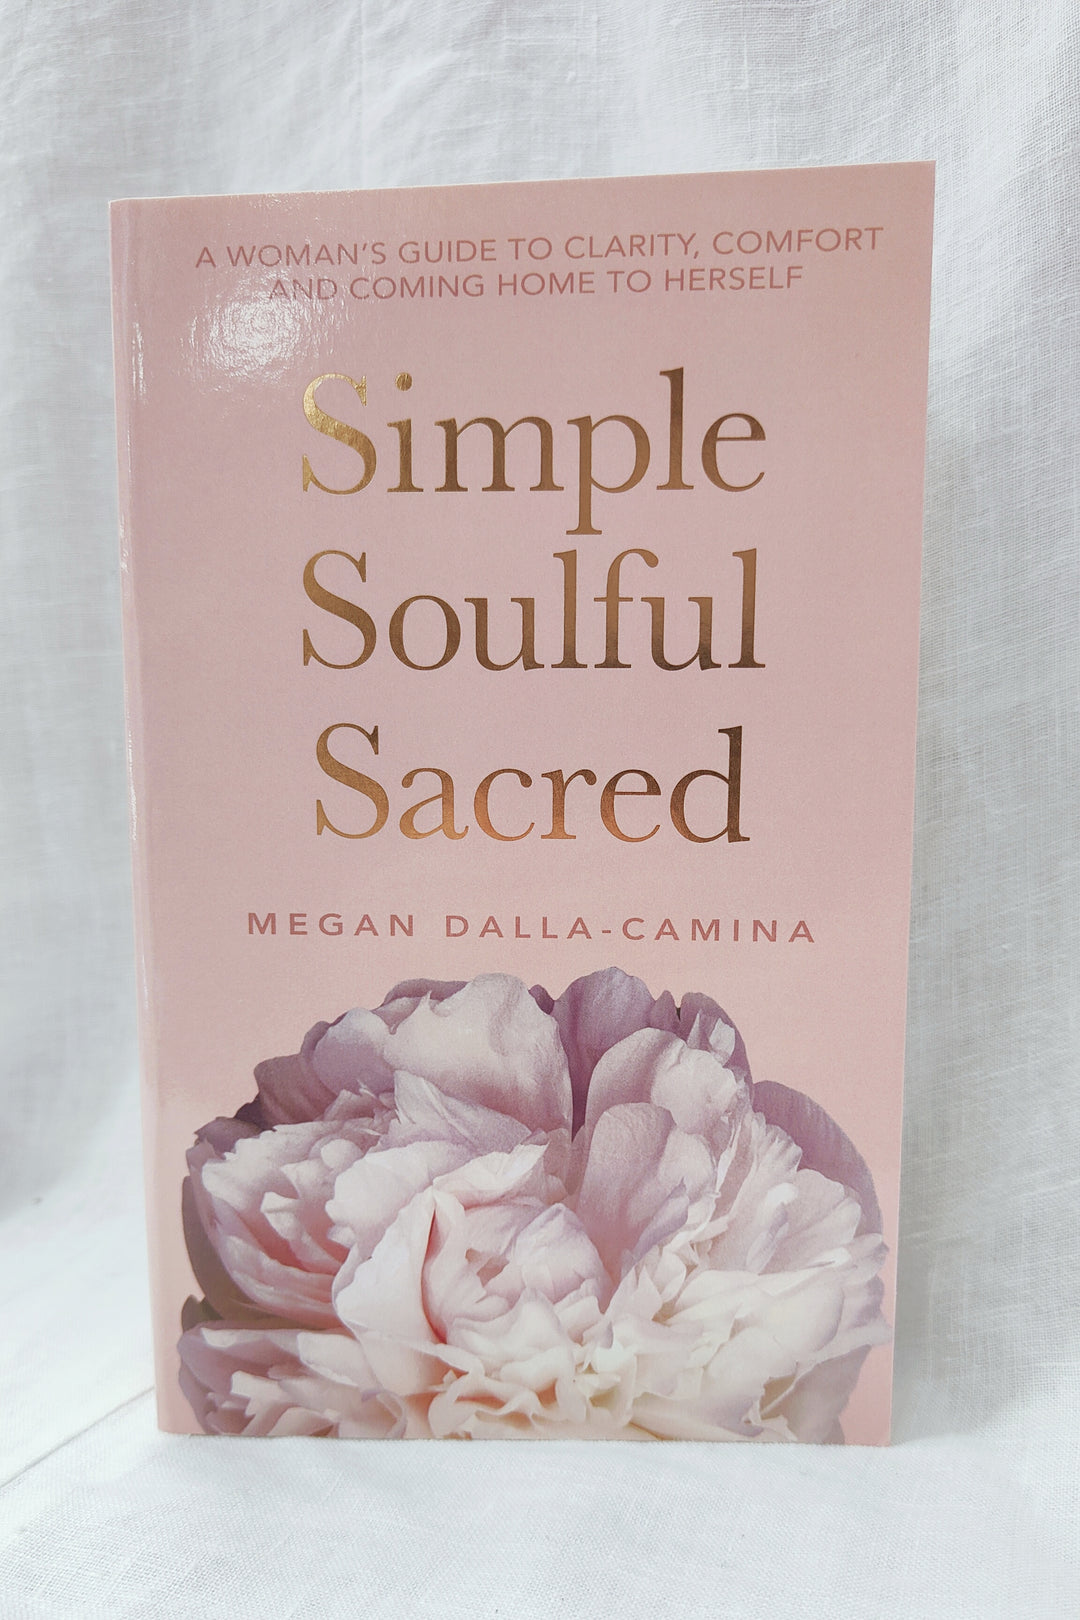 Simple Soulful Sacred Book